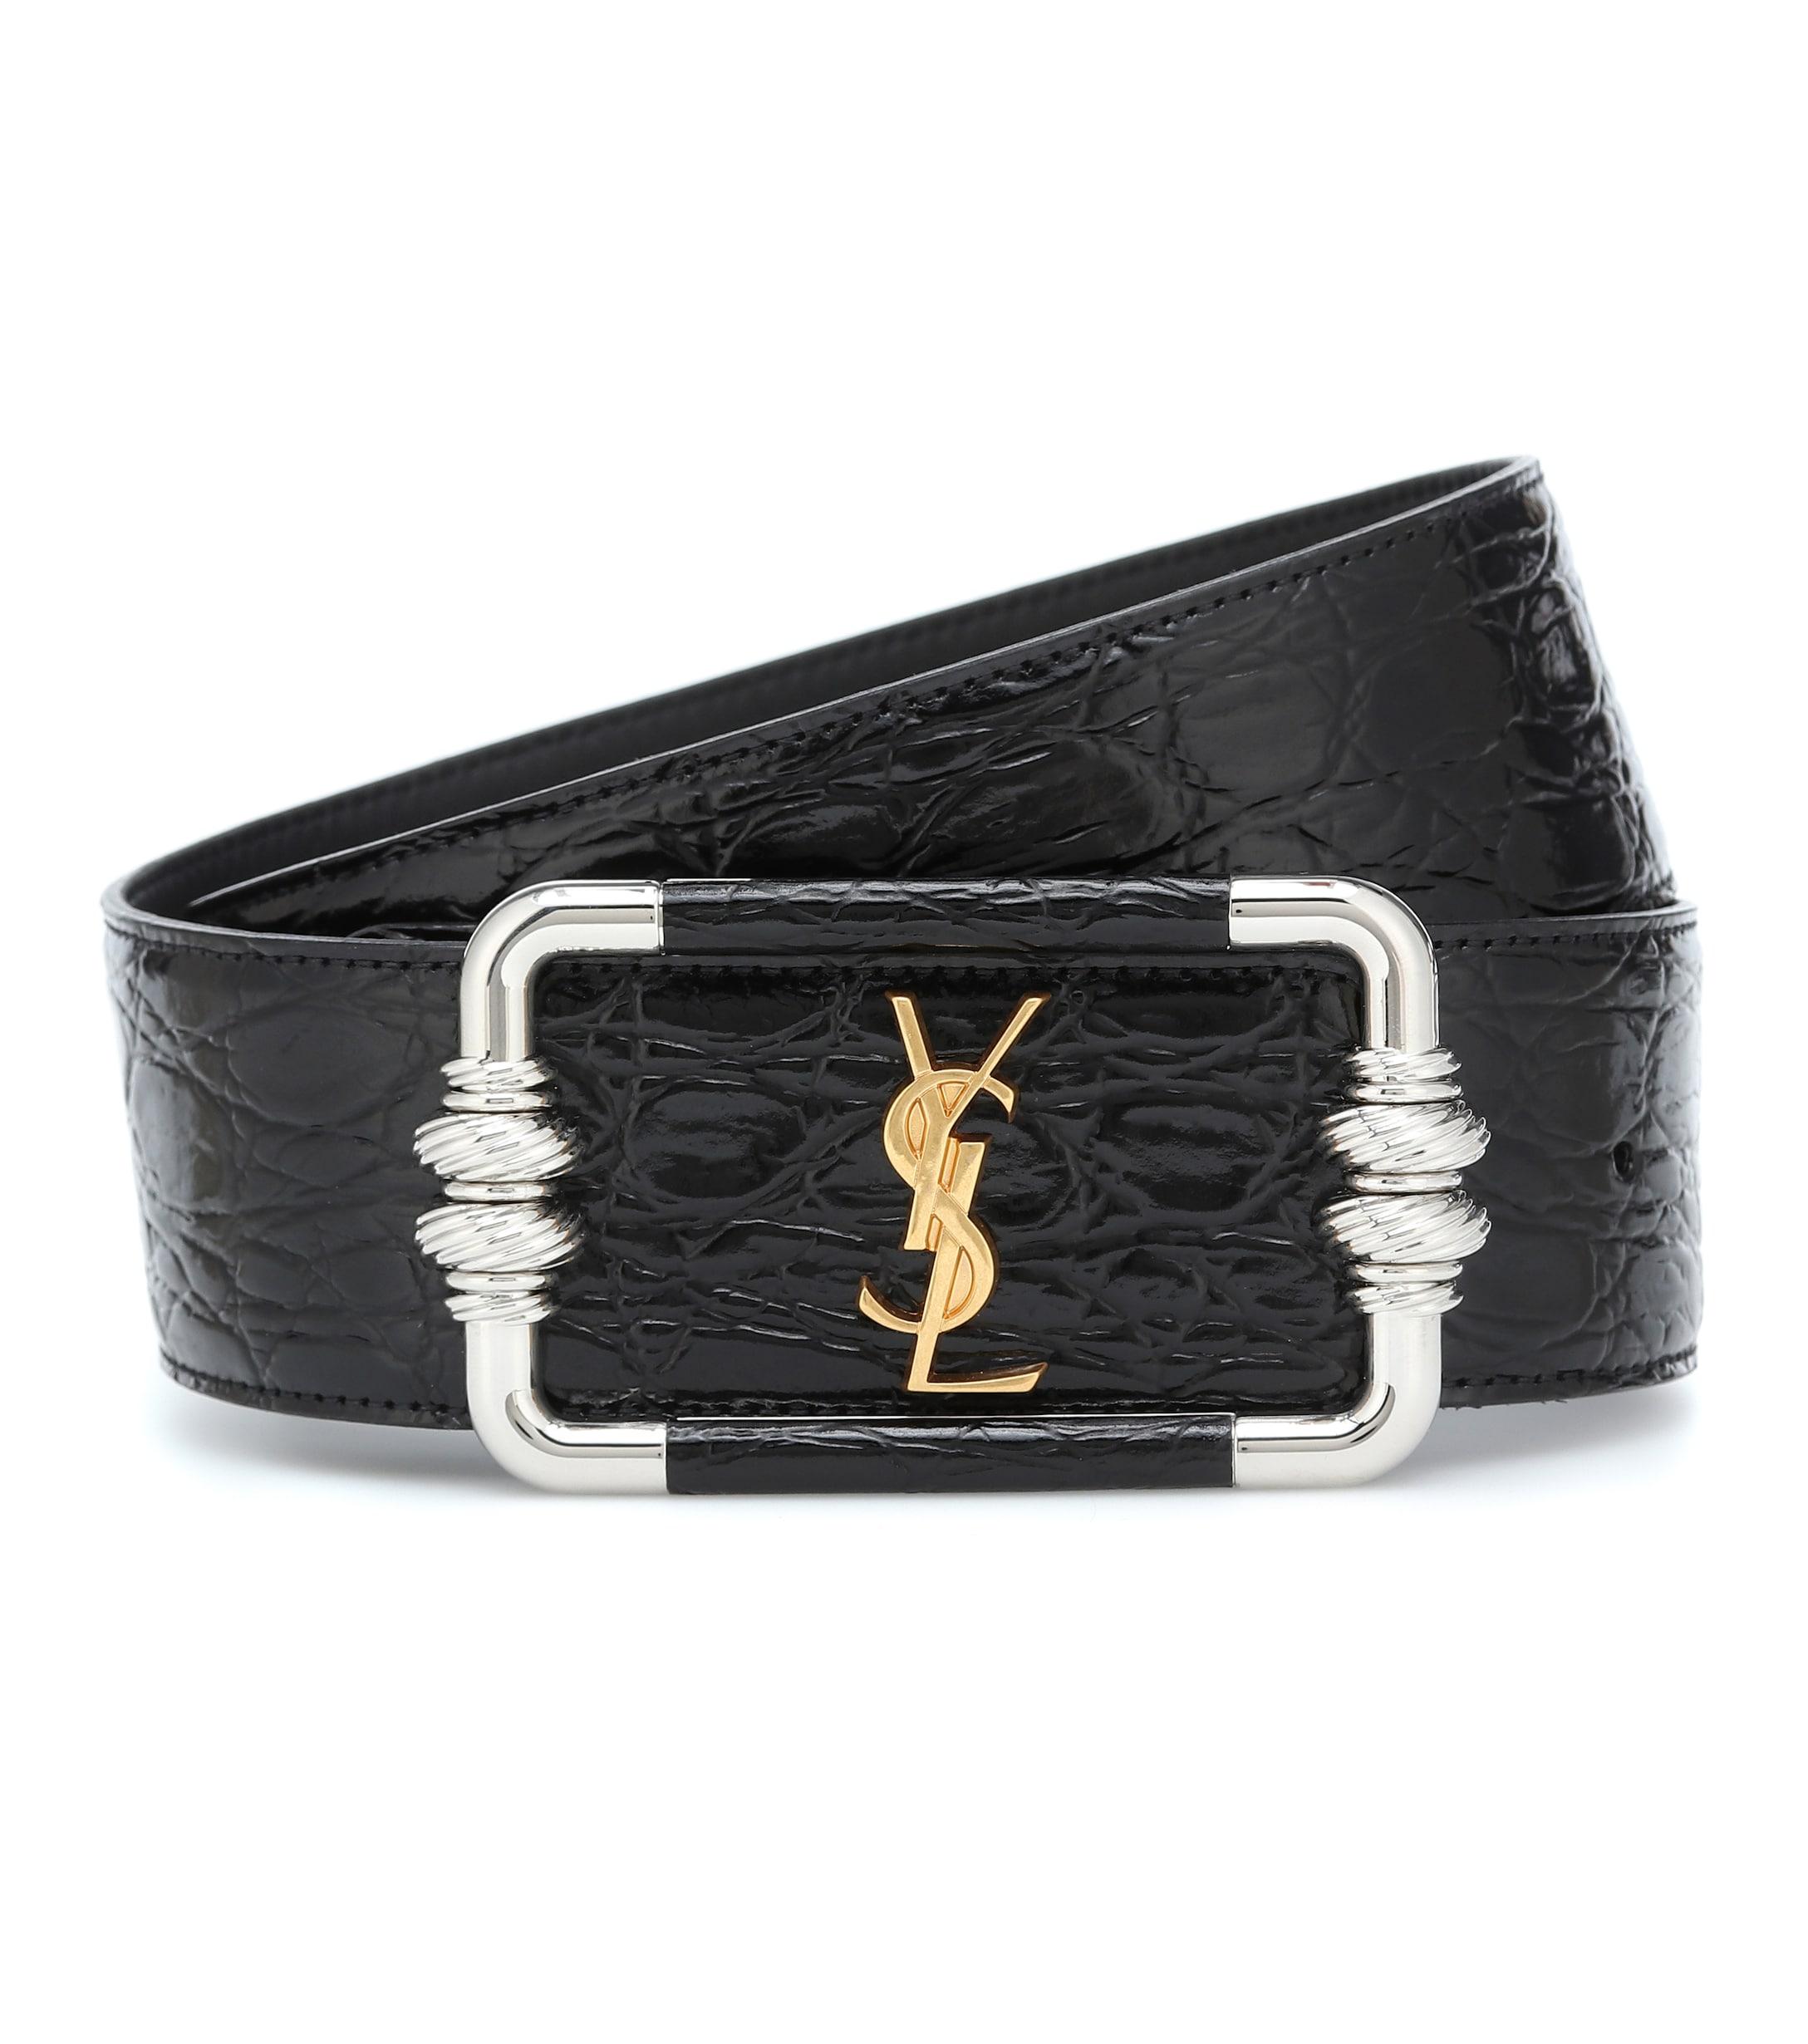 Saint Laurent YSL Monogram Leather Belt *SMOKE FREE - Depop